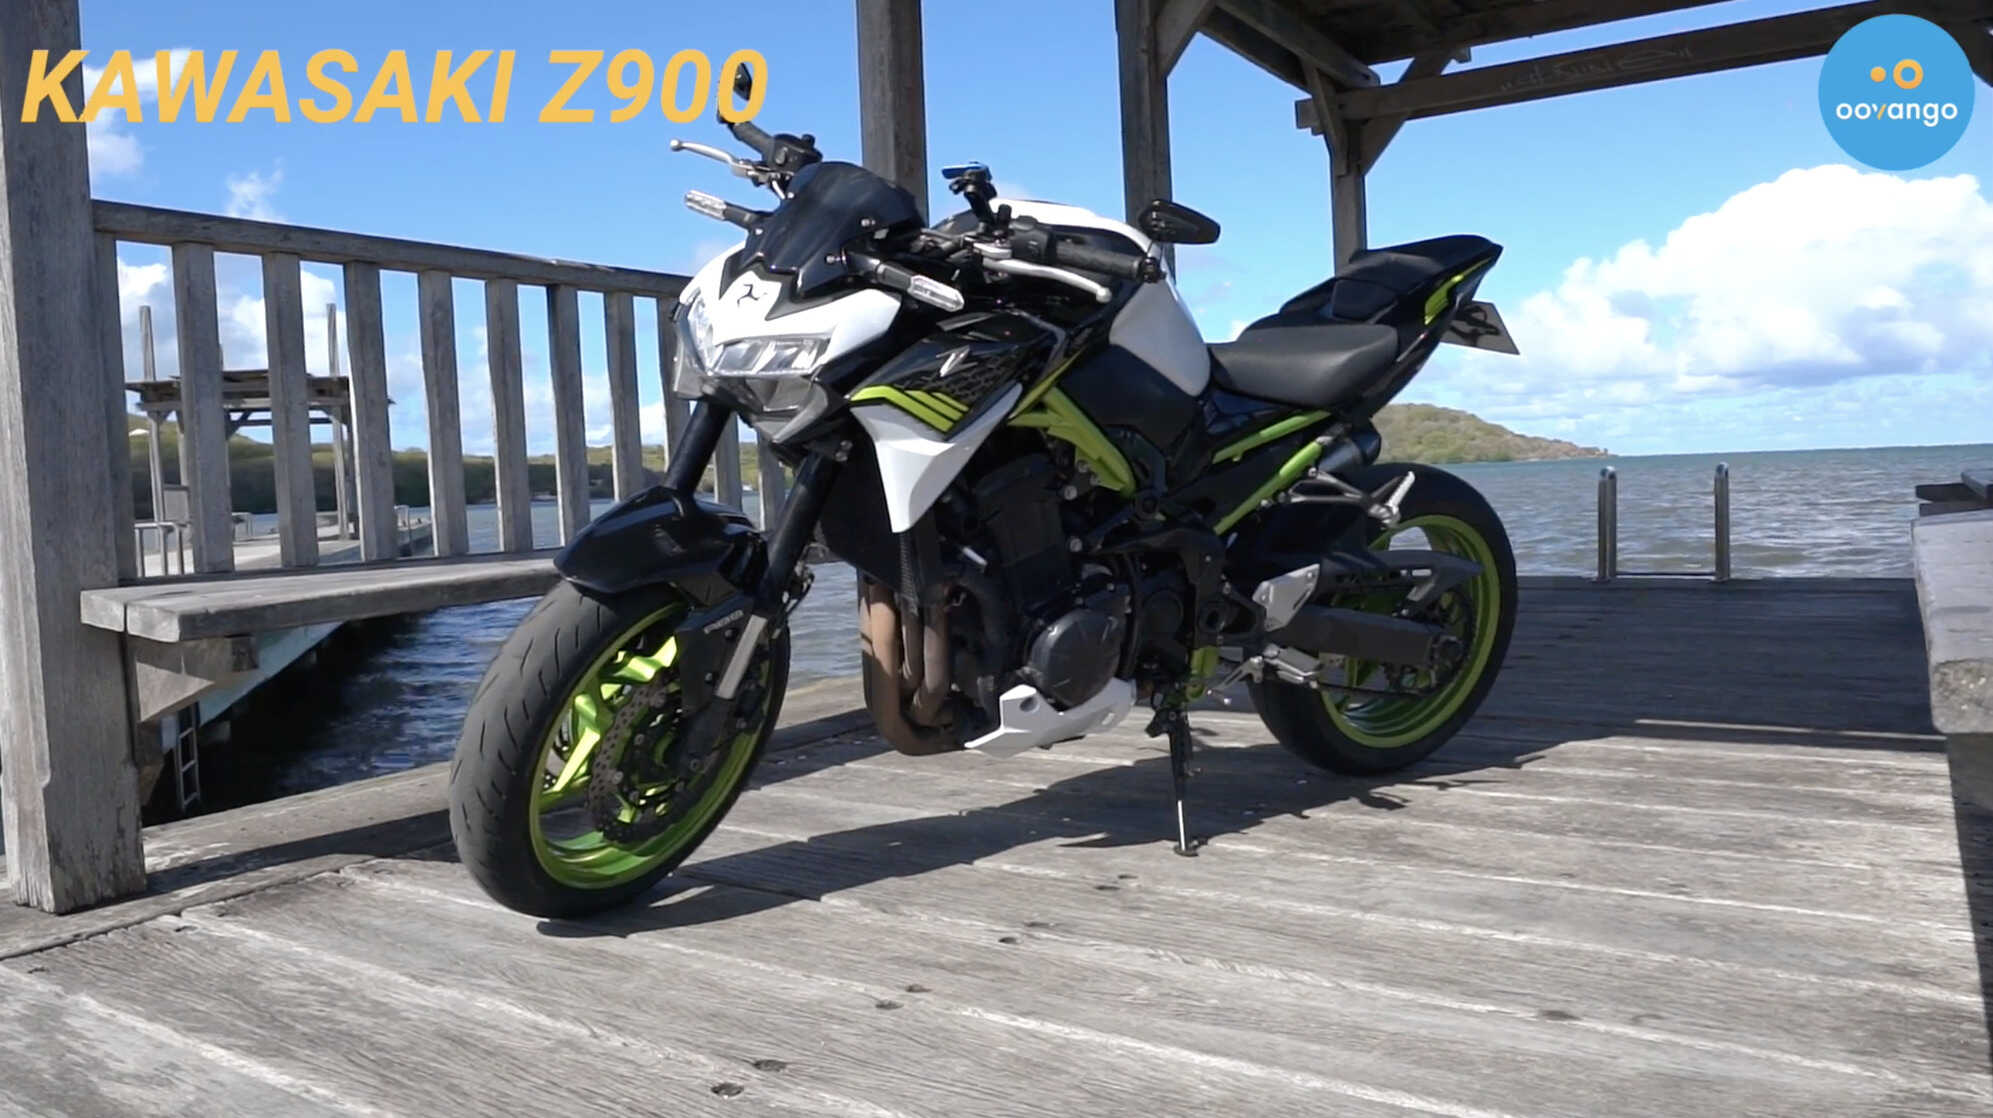 La Kawasaki Z900 2021, un très bon cru - Oovango